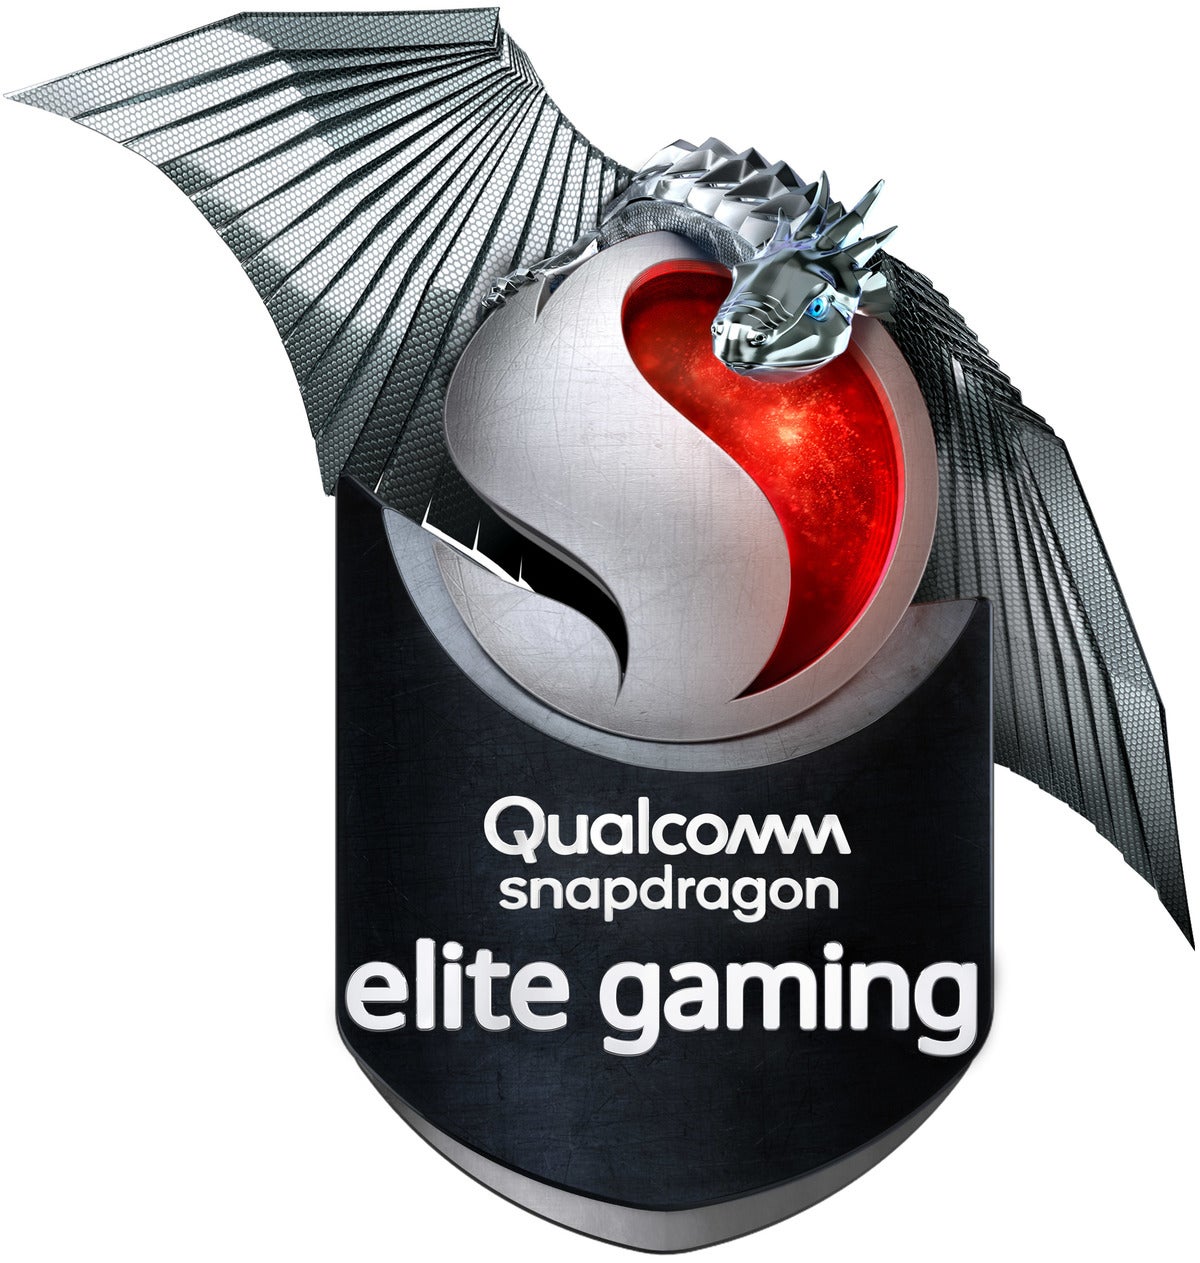 Qualcomm snapdragon elite gaming badge